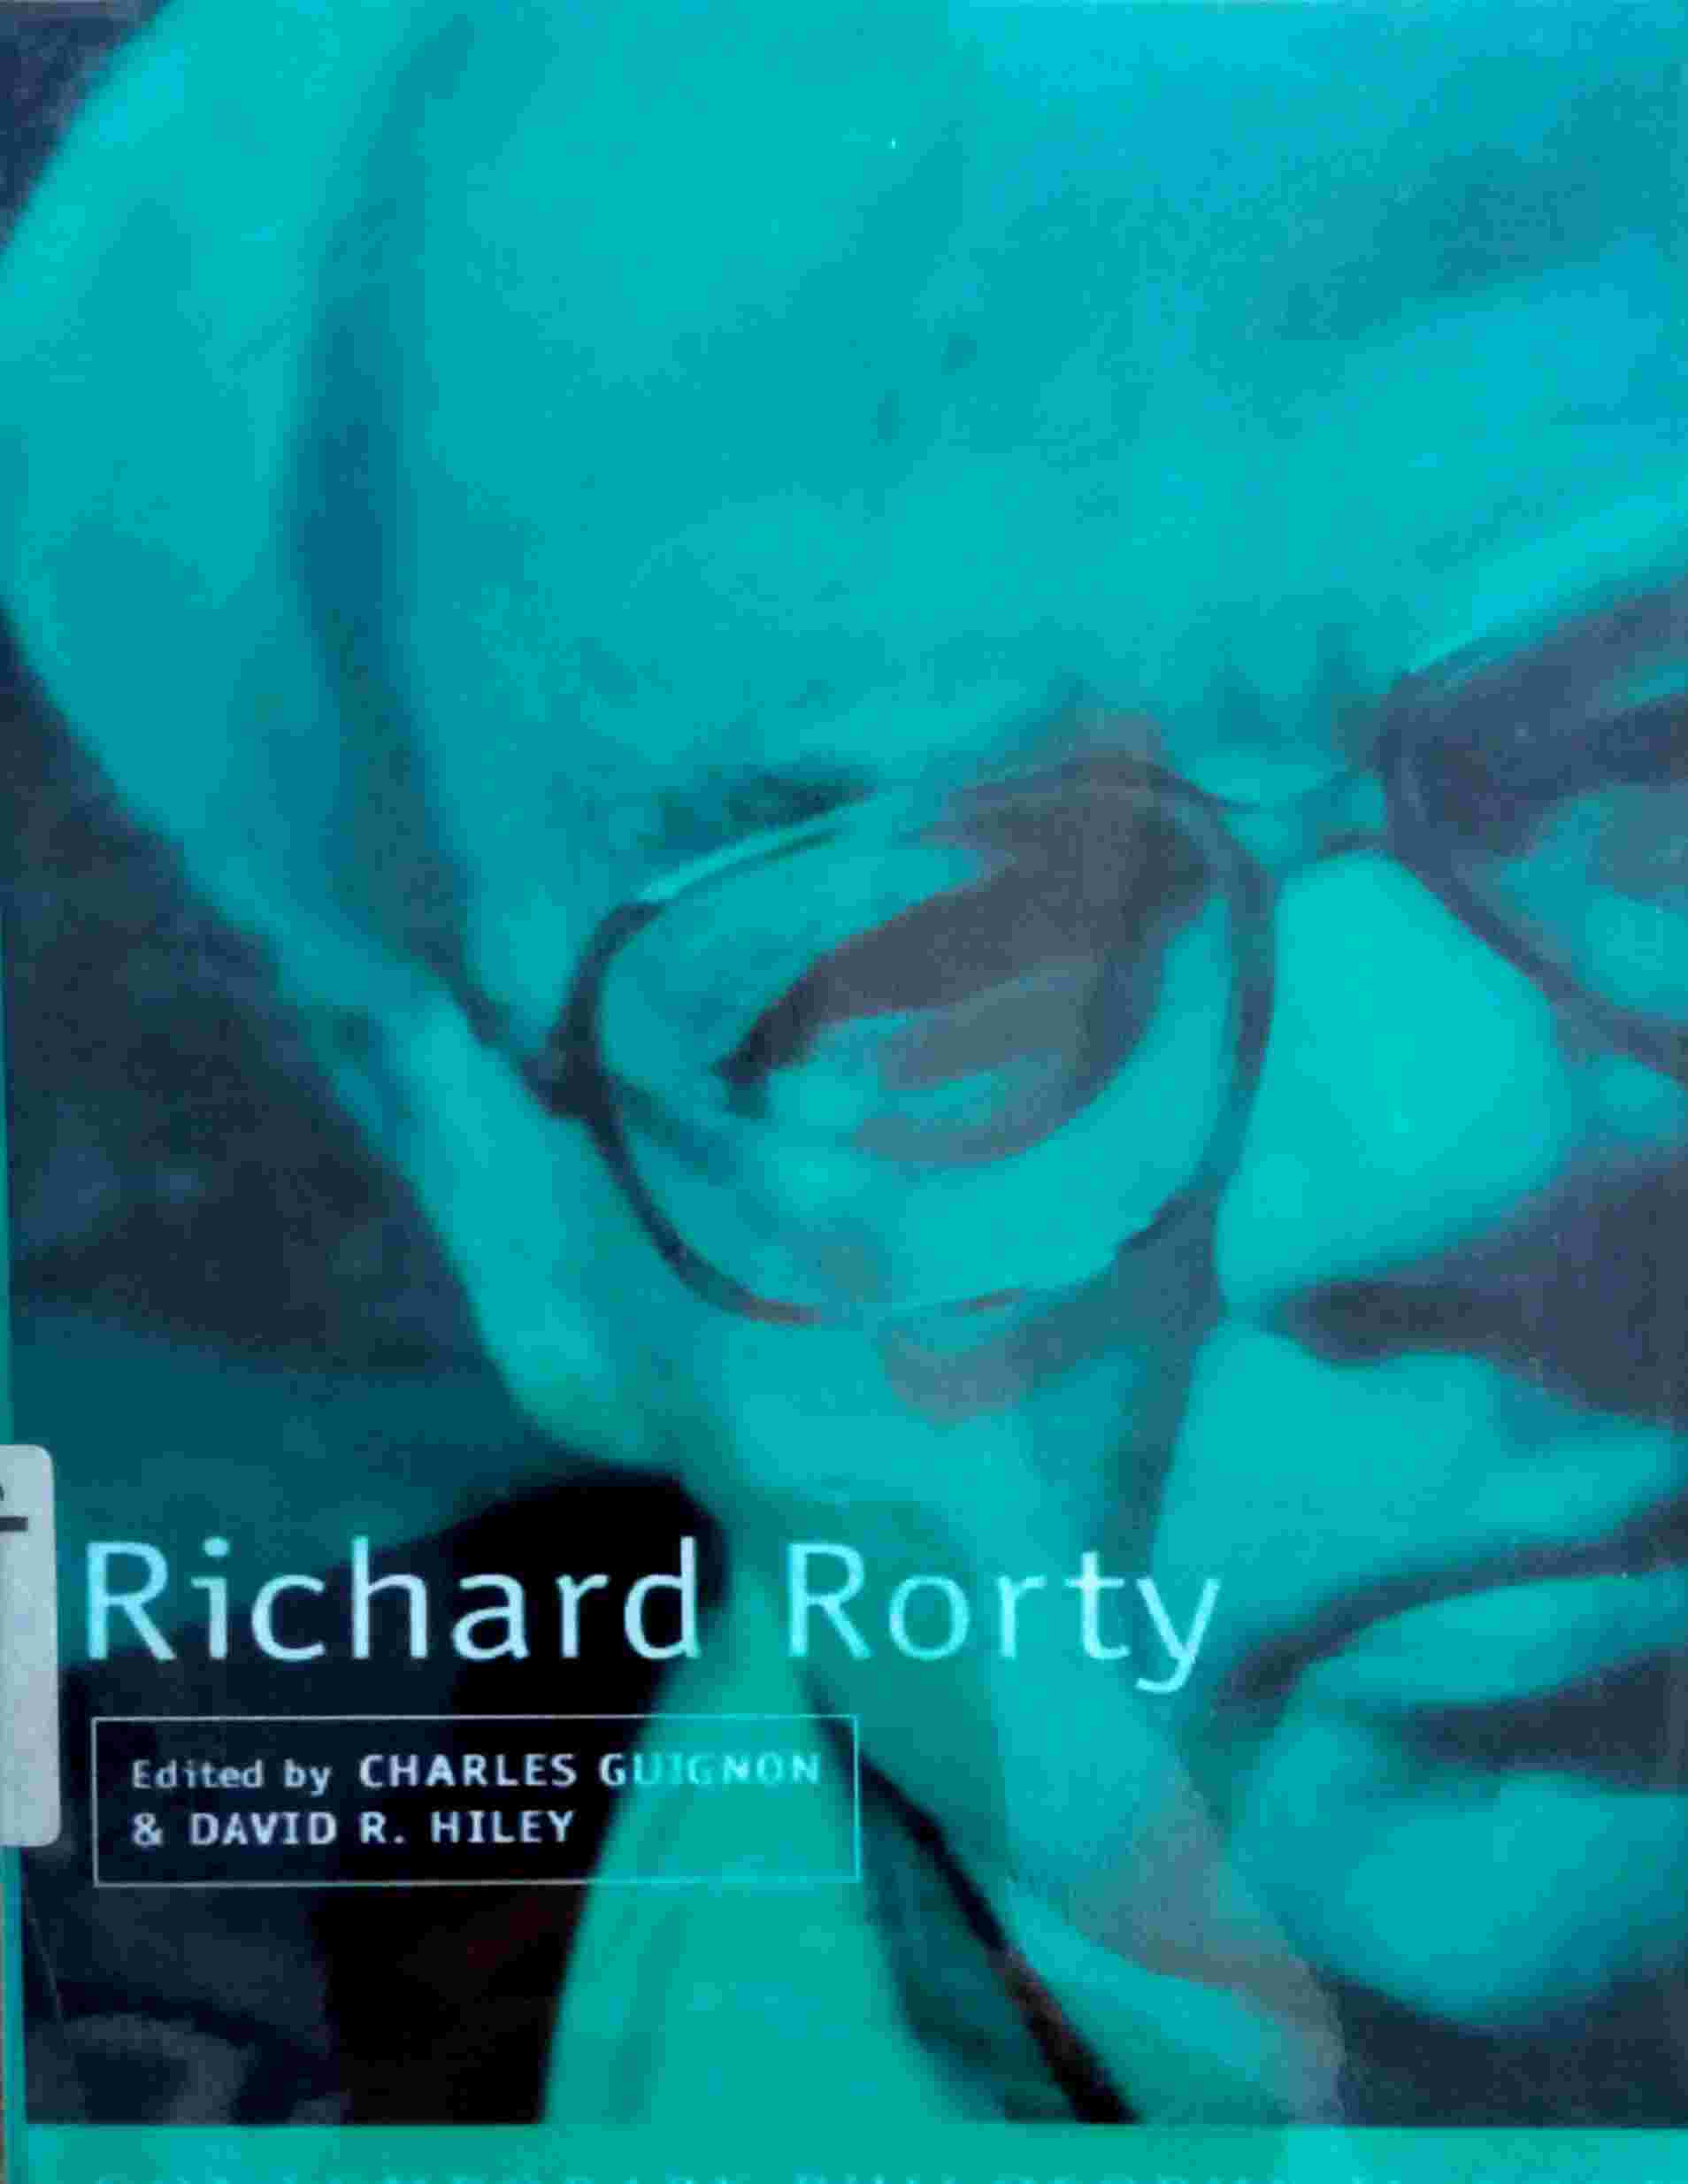 RICHARD RORTY